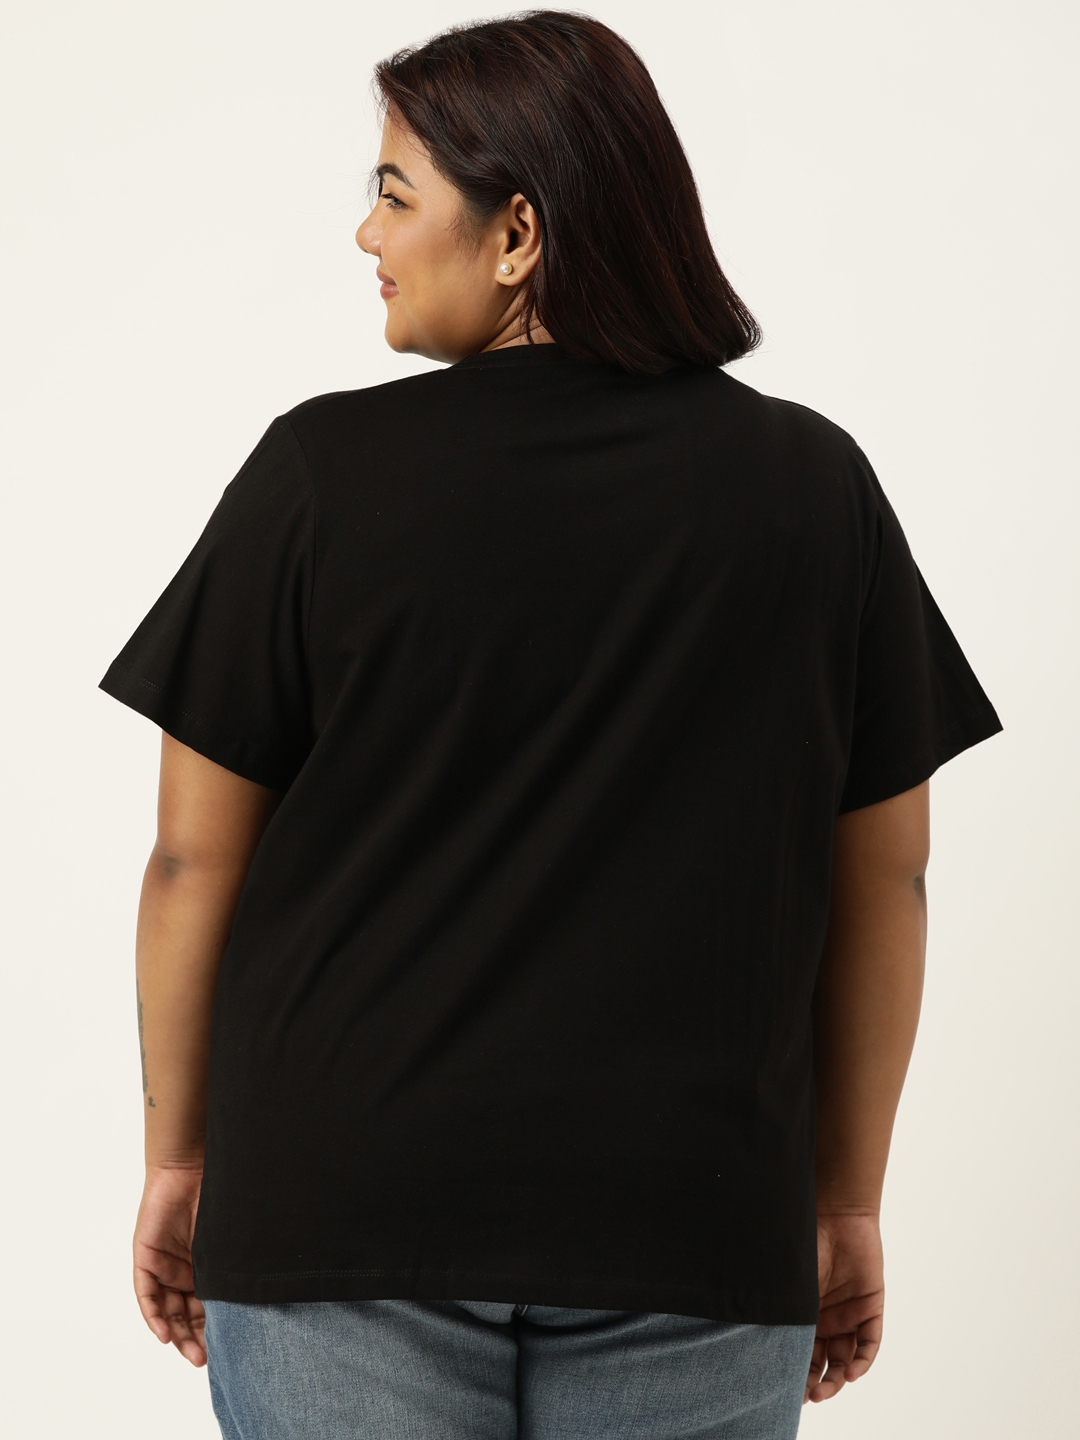 Plus Size Black Graphic Printed Round Neck Bio Wash tshirt For women